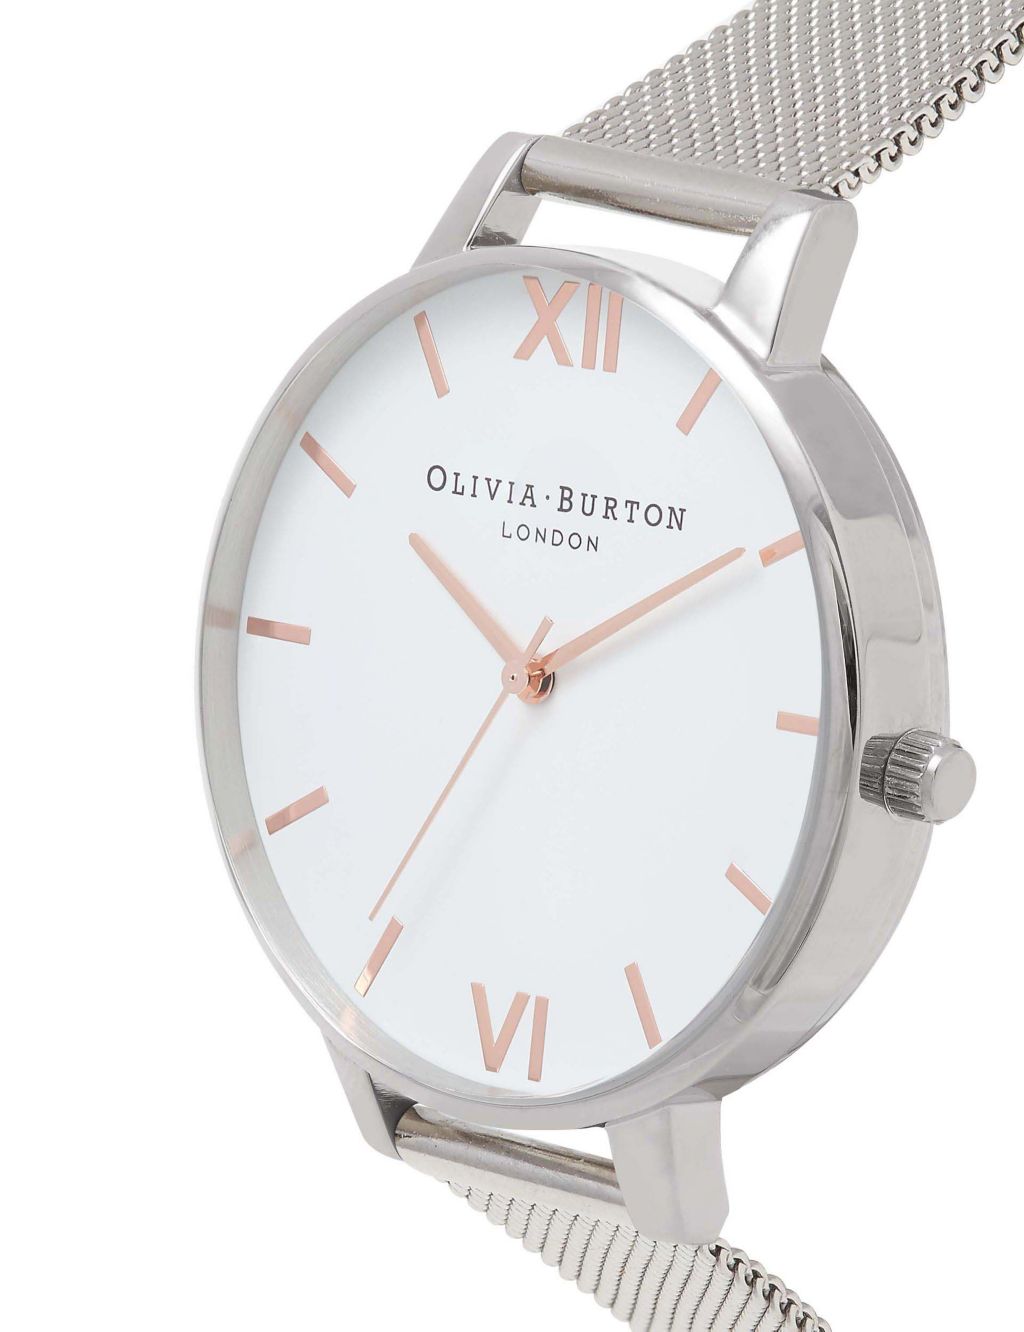 Olivia Burton Big Dial Silver Quartz Watch image 2